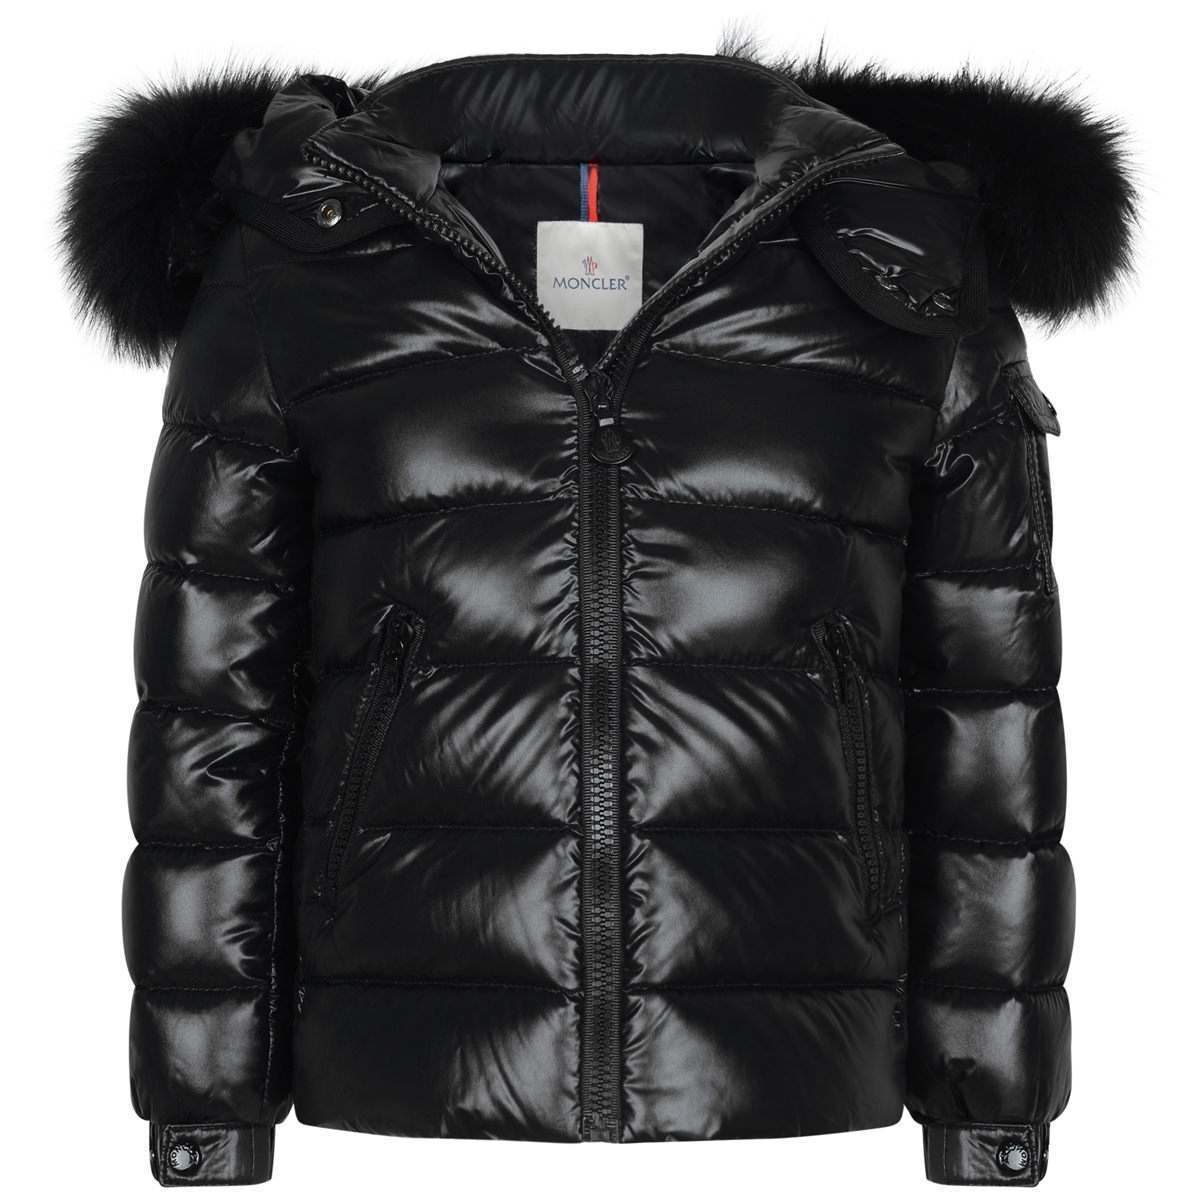 Cheap Moncler Jacket Warm, Accompany You Through a Warm Winter